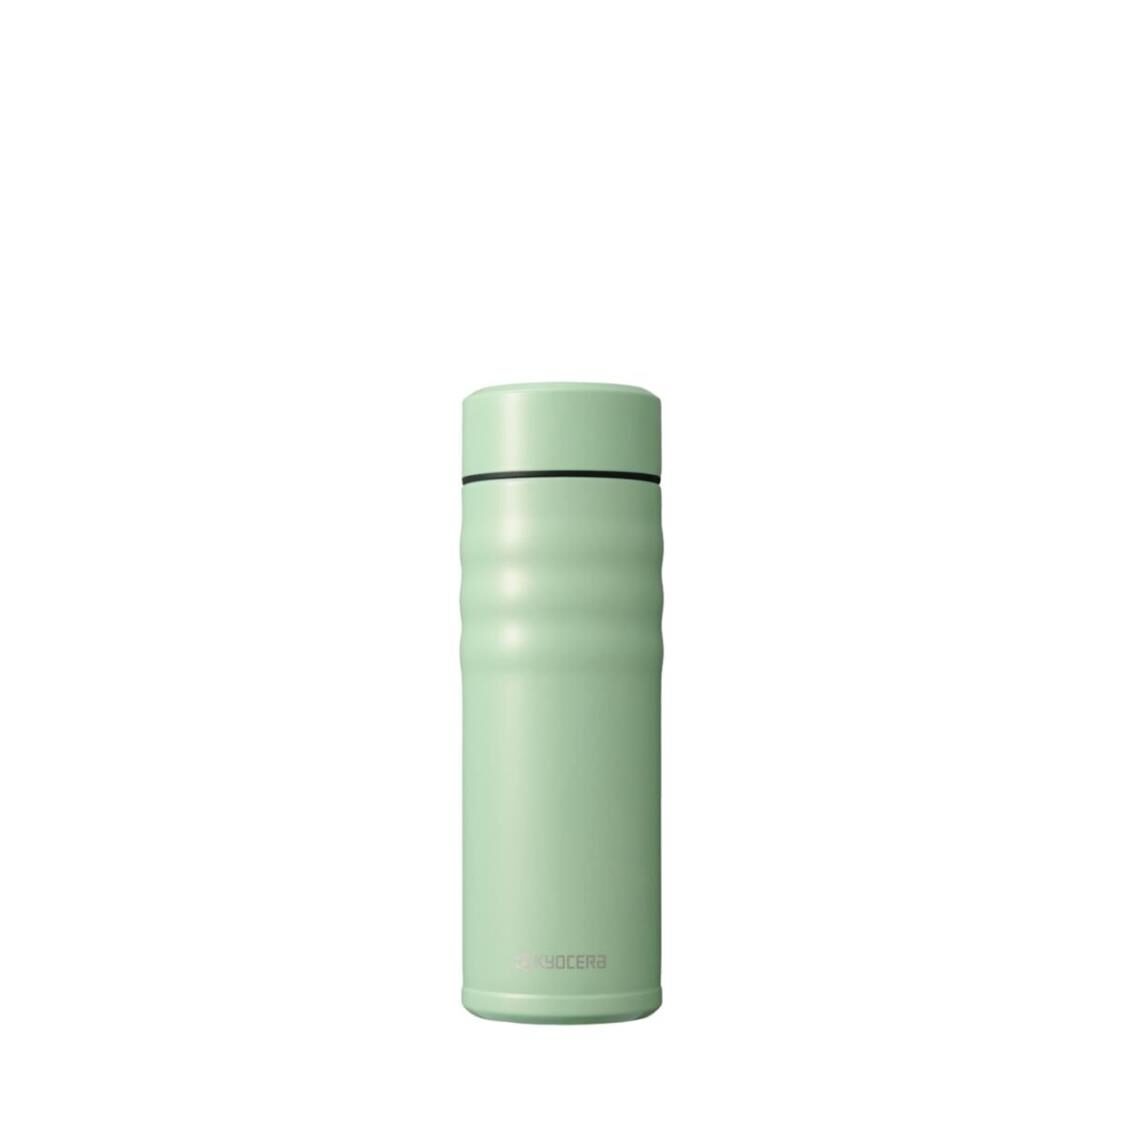 Kyocera 500ml Advanced Ceramic Coated Cerabrid Mug - Green MB-17S GR